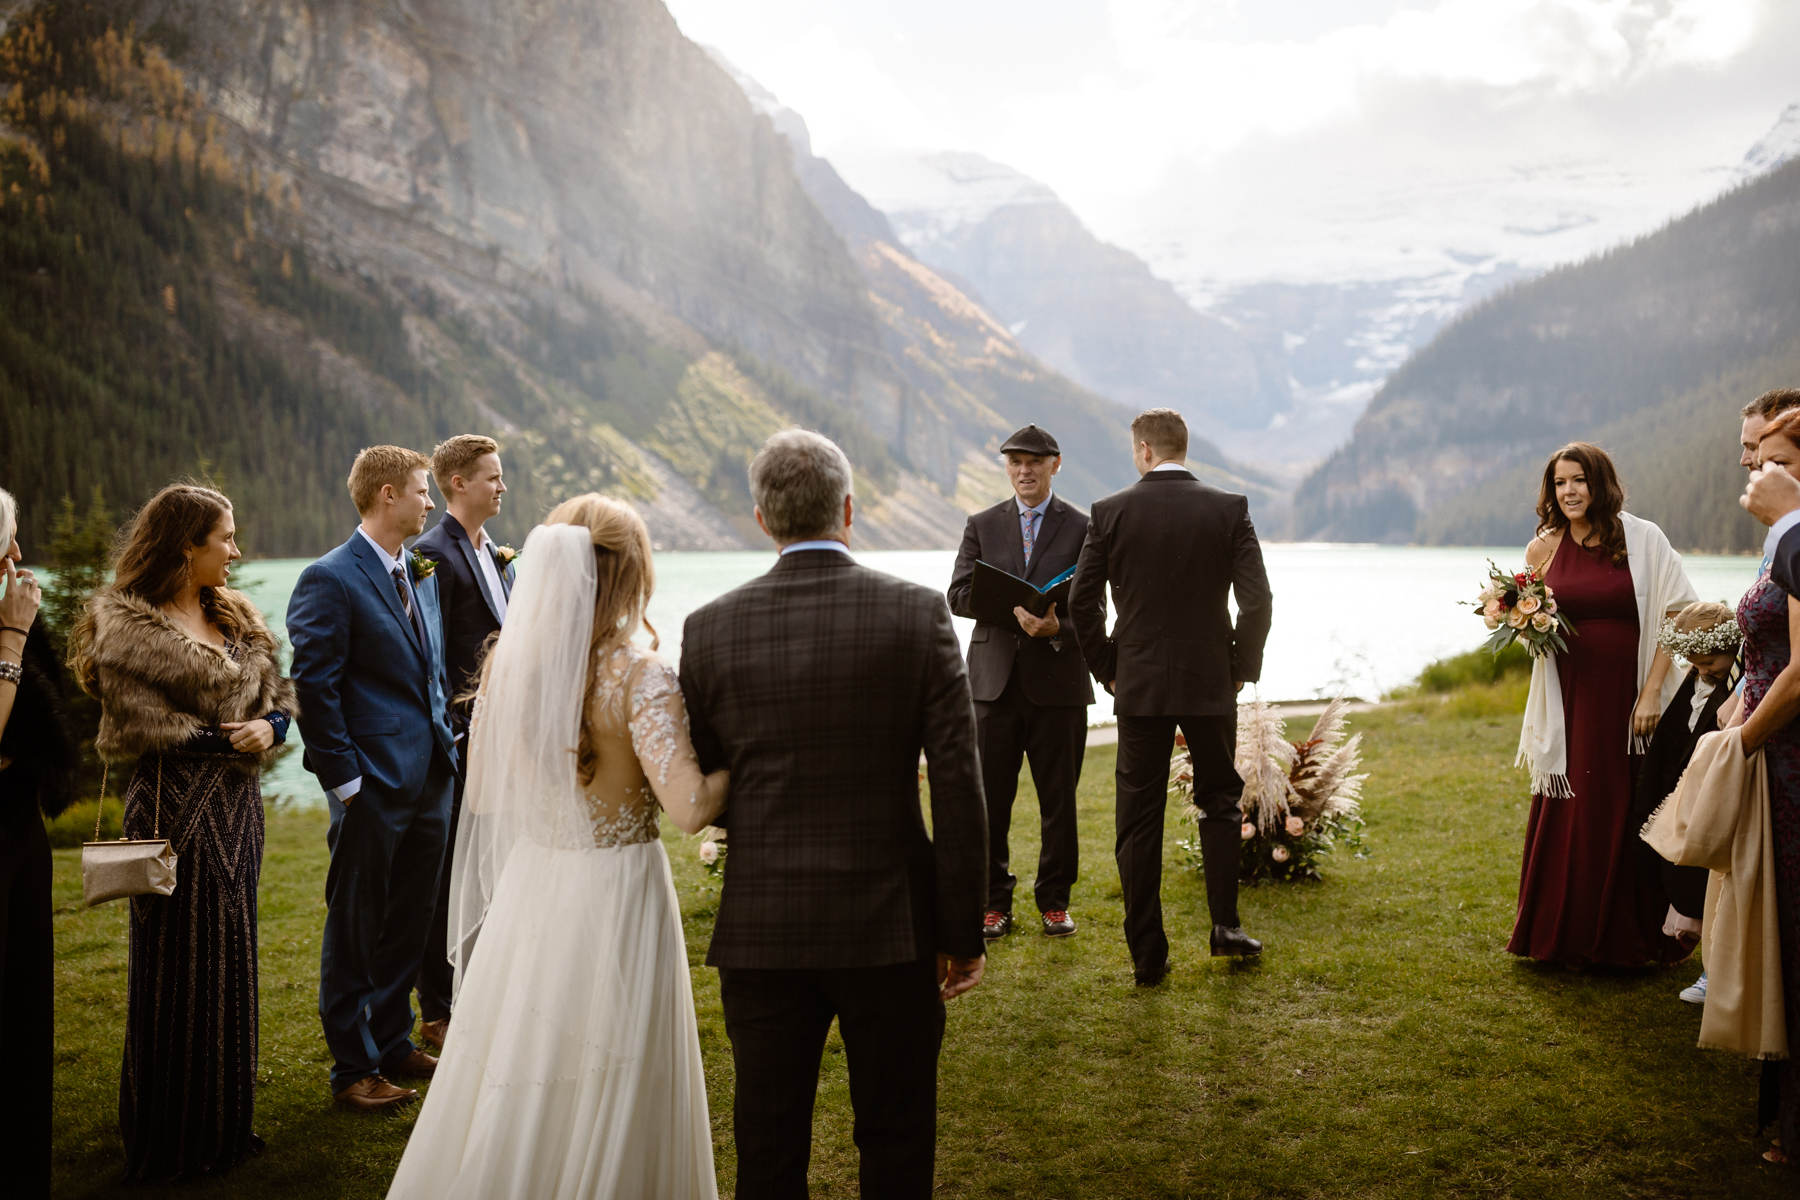 Moraine Lake wedding photos - Image 8